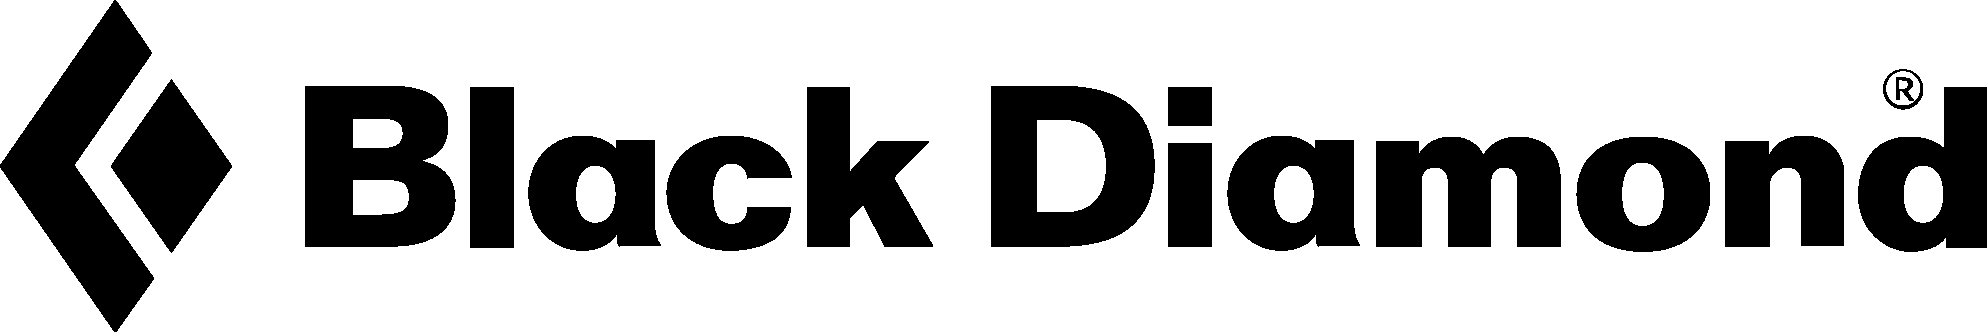 Black Diamond Logo png